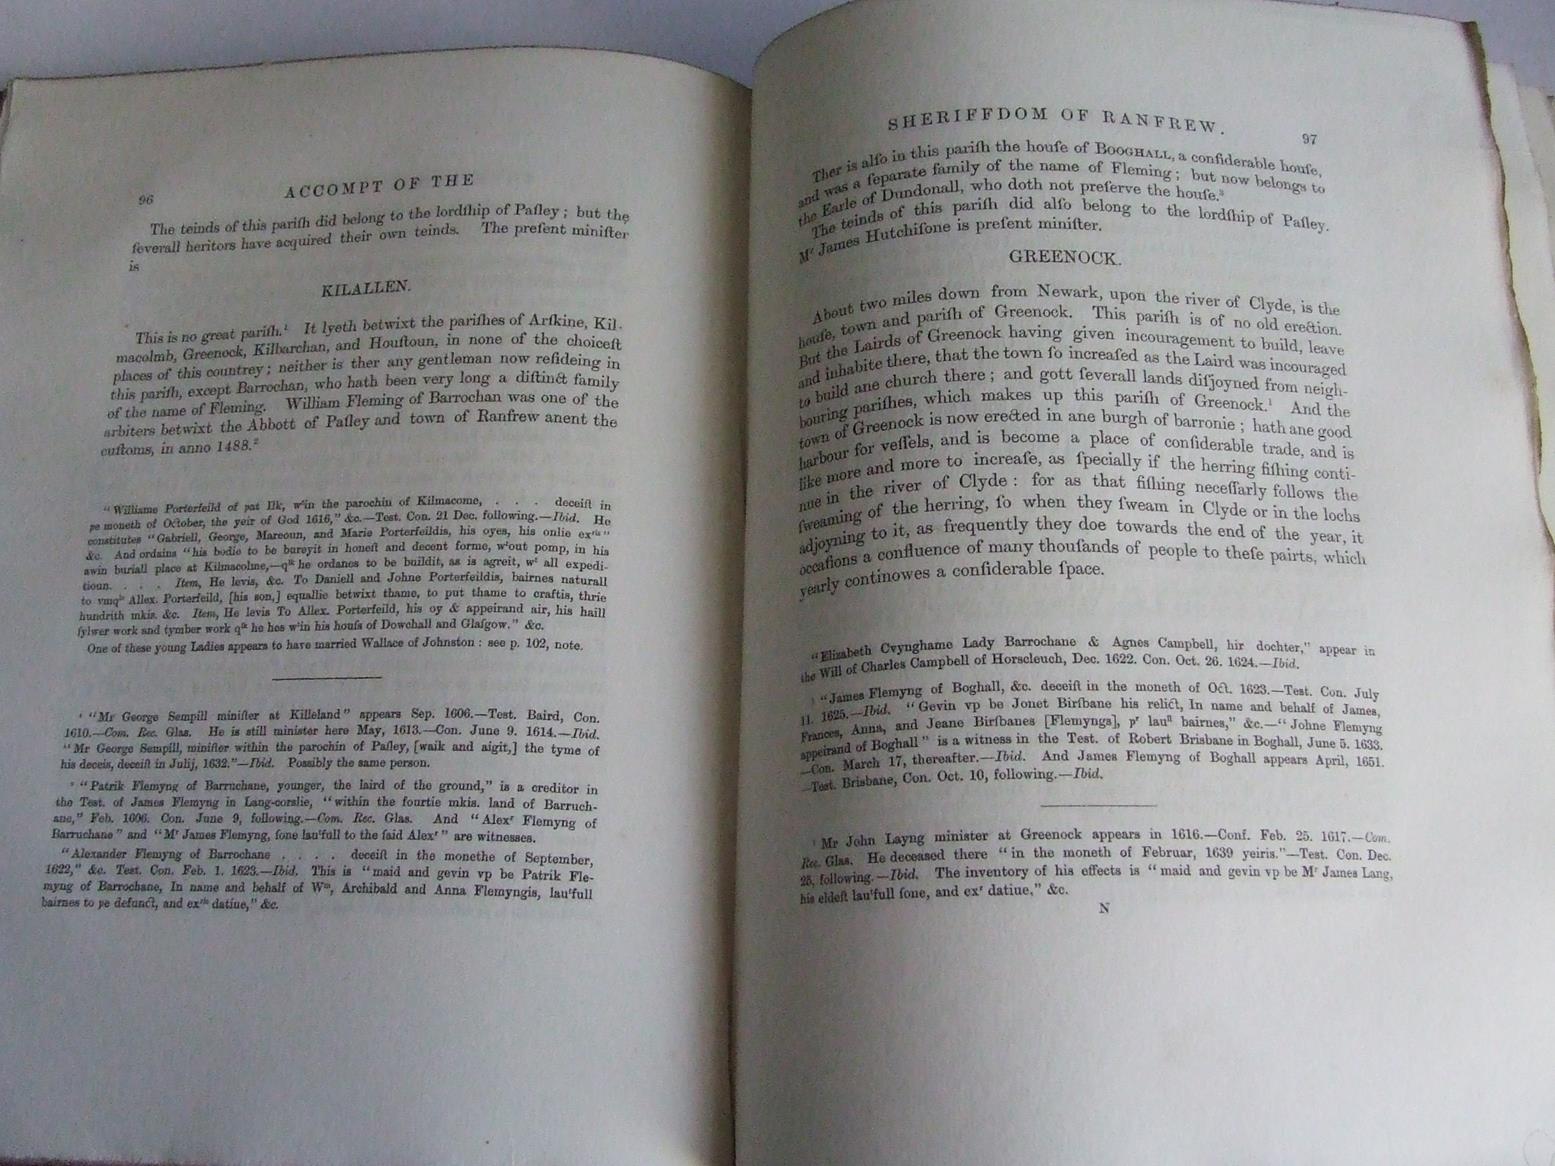 Descriptions of the Sheriffdoms of Lanark and Renfrew